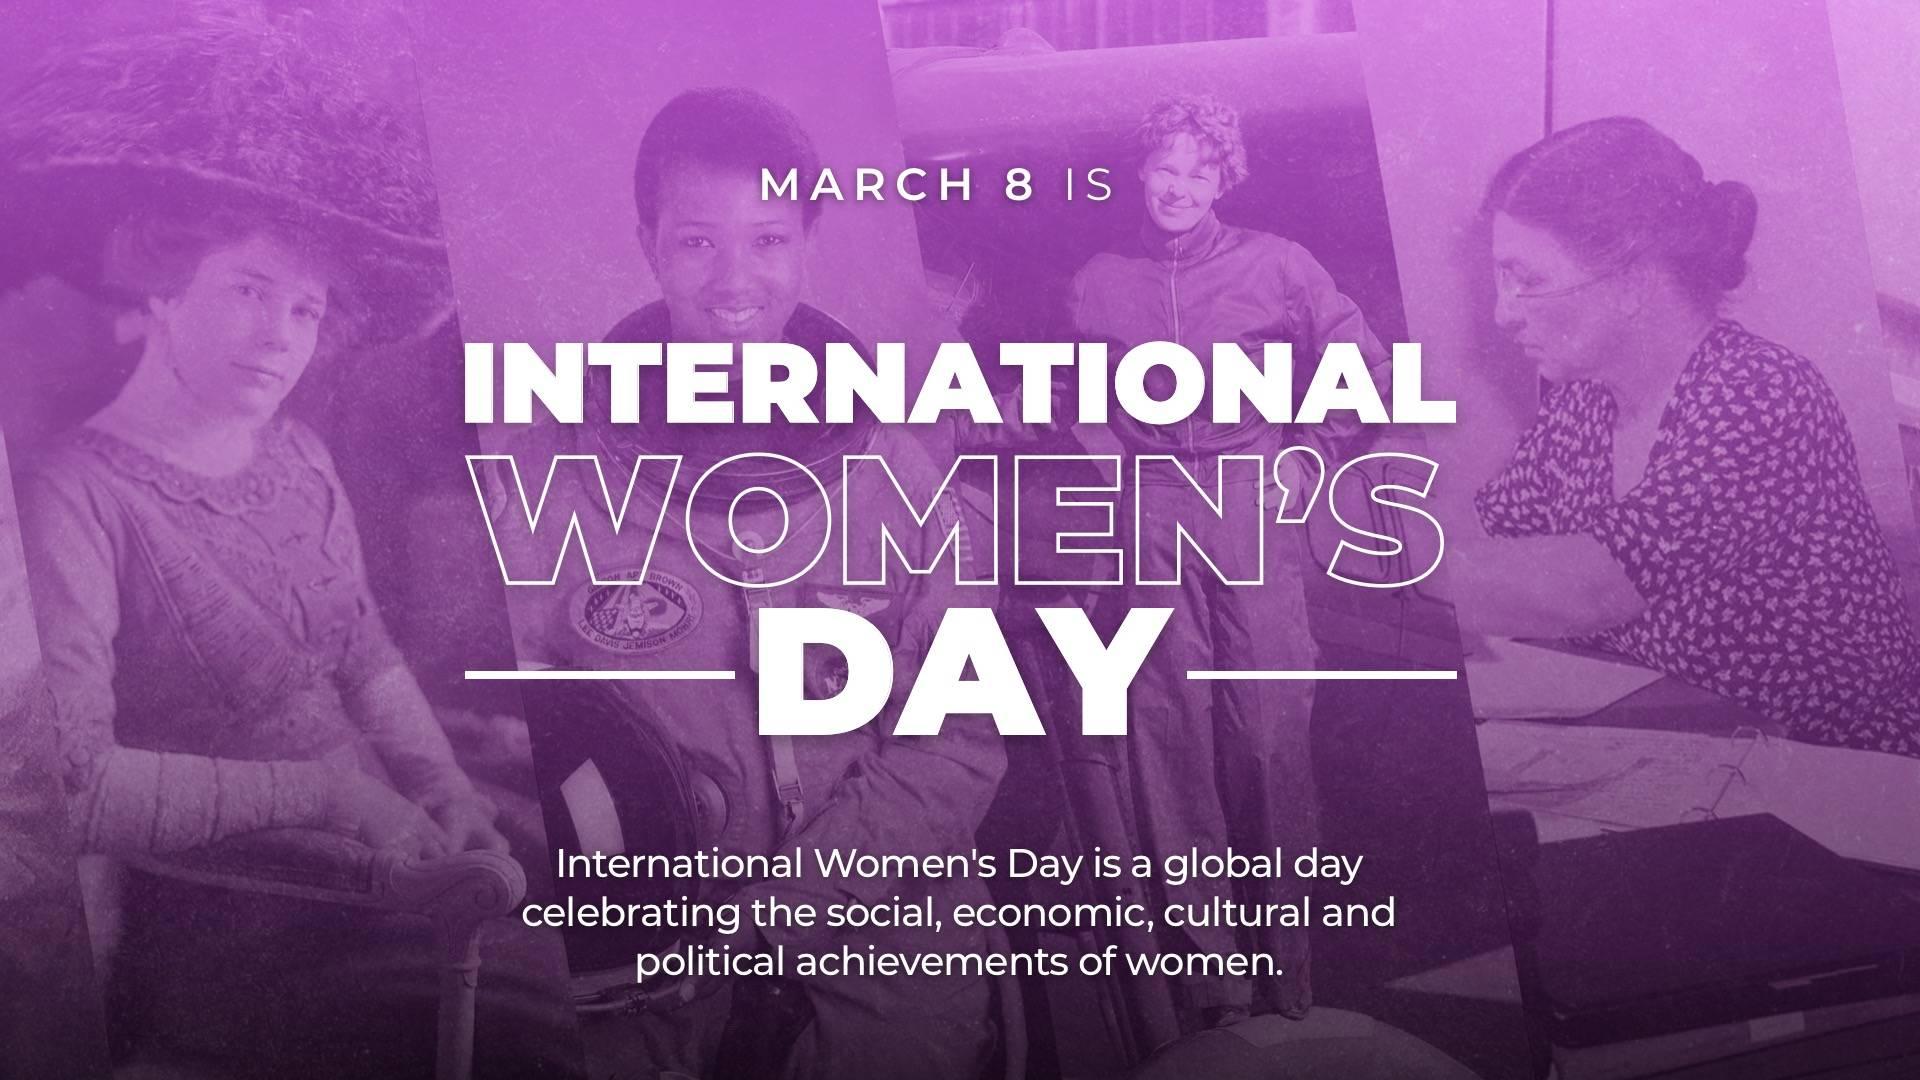 International Women's Day Digital Signage Template